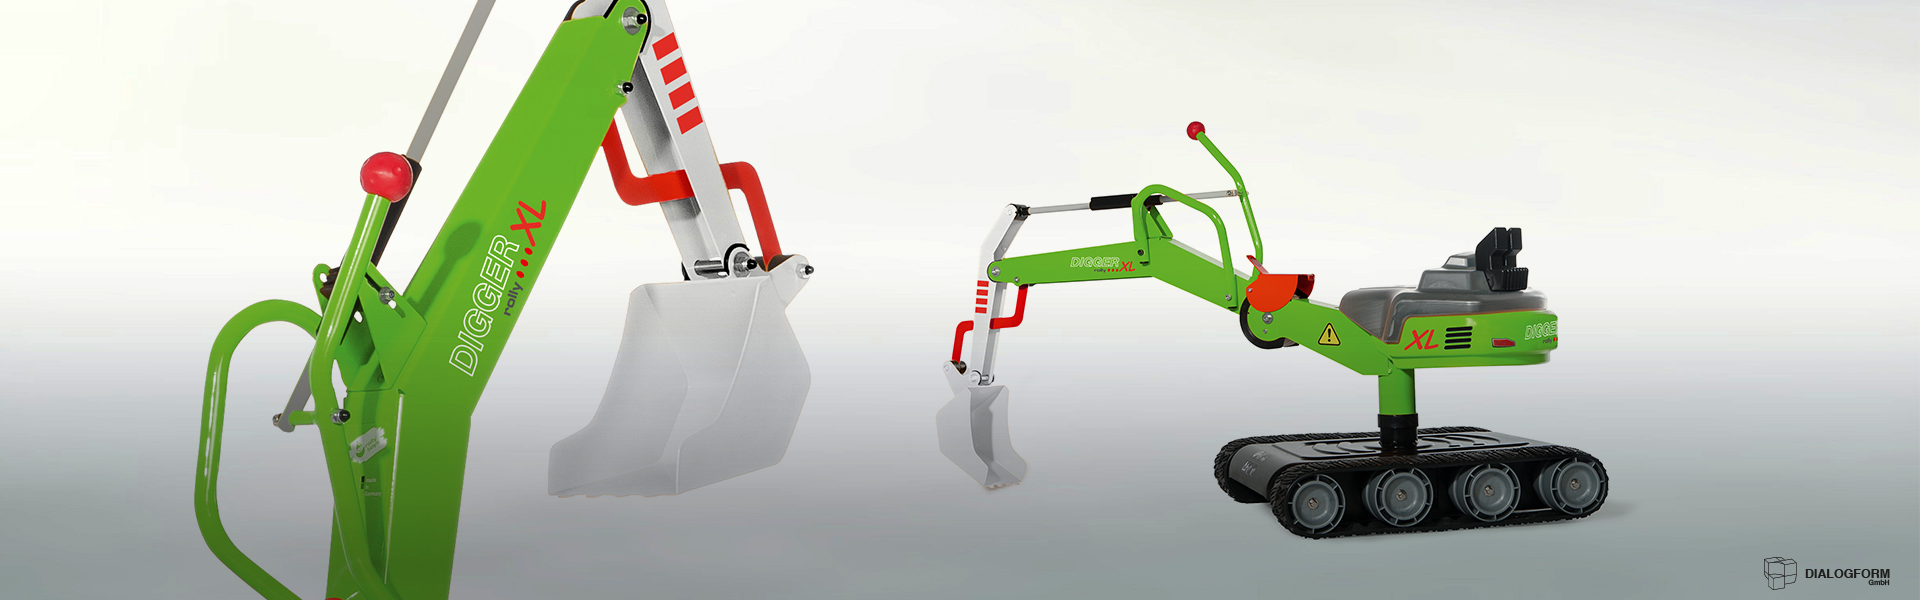 Industrial Design / Industrie Gestaltung Dialogform - Spielzeug rollyDigger XL - rollyToys